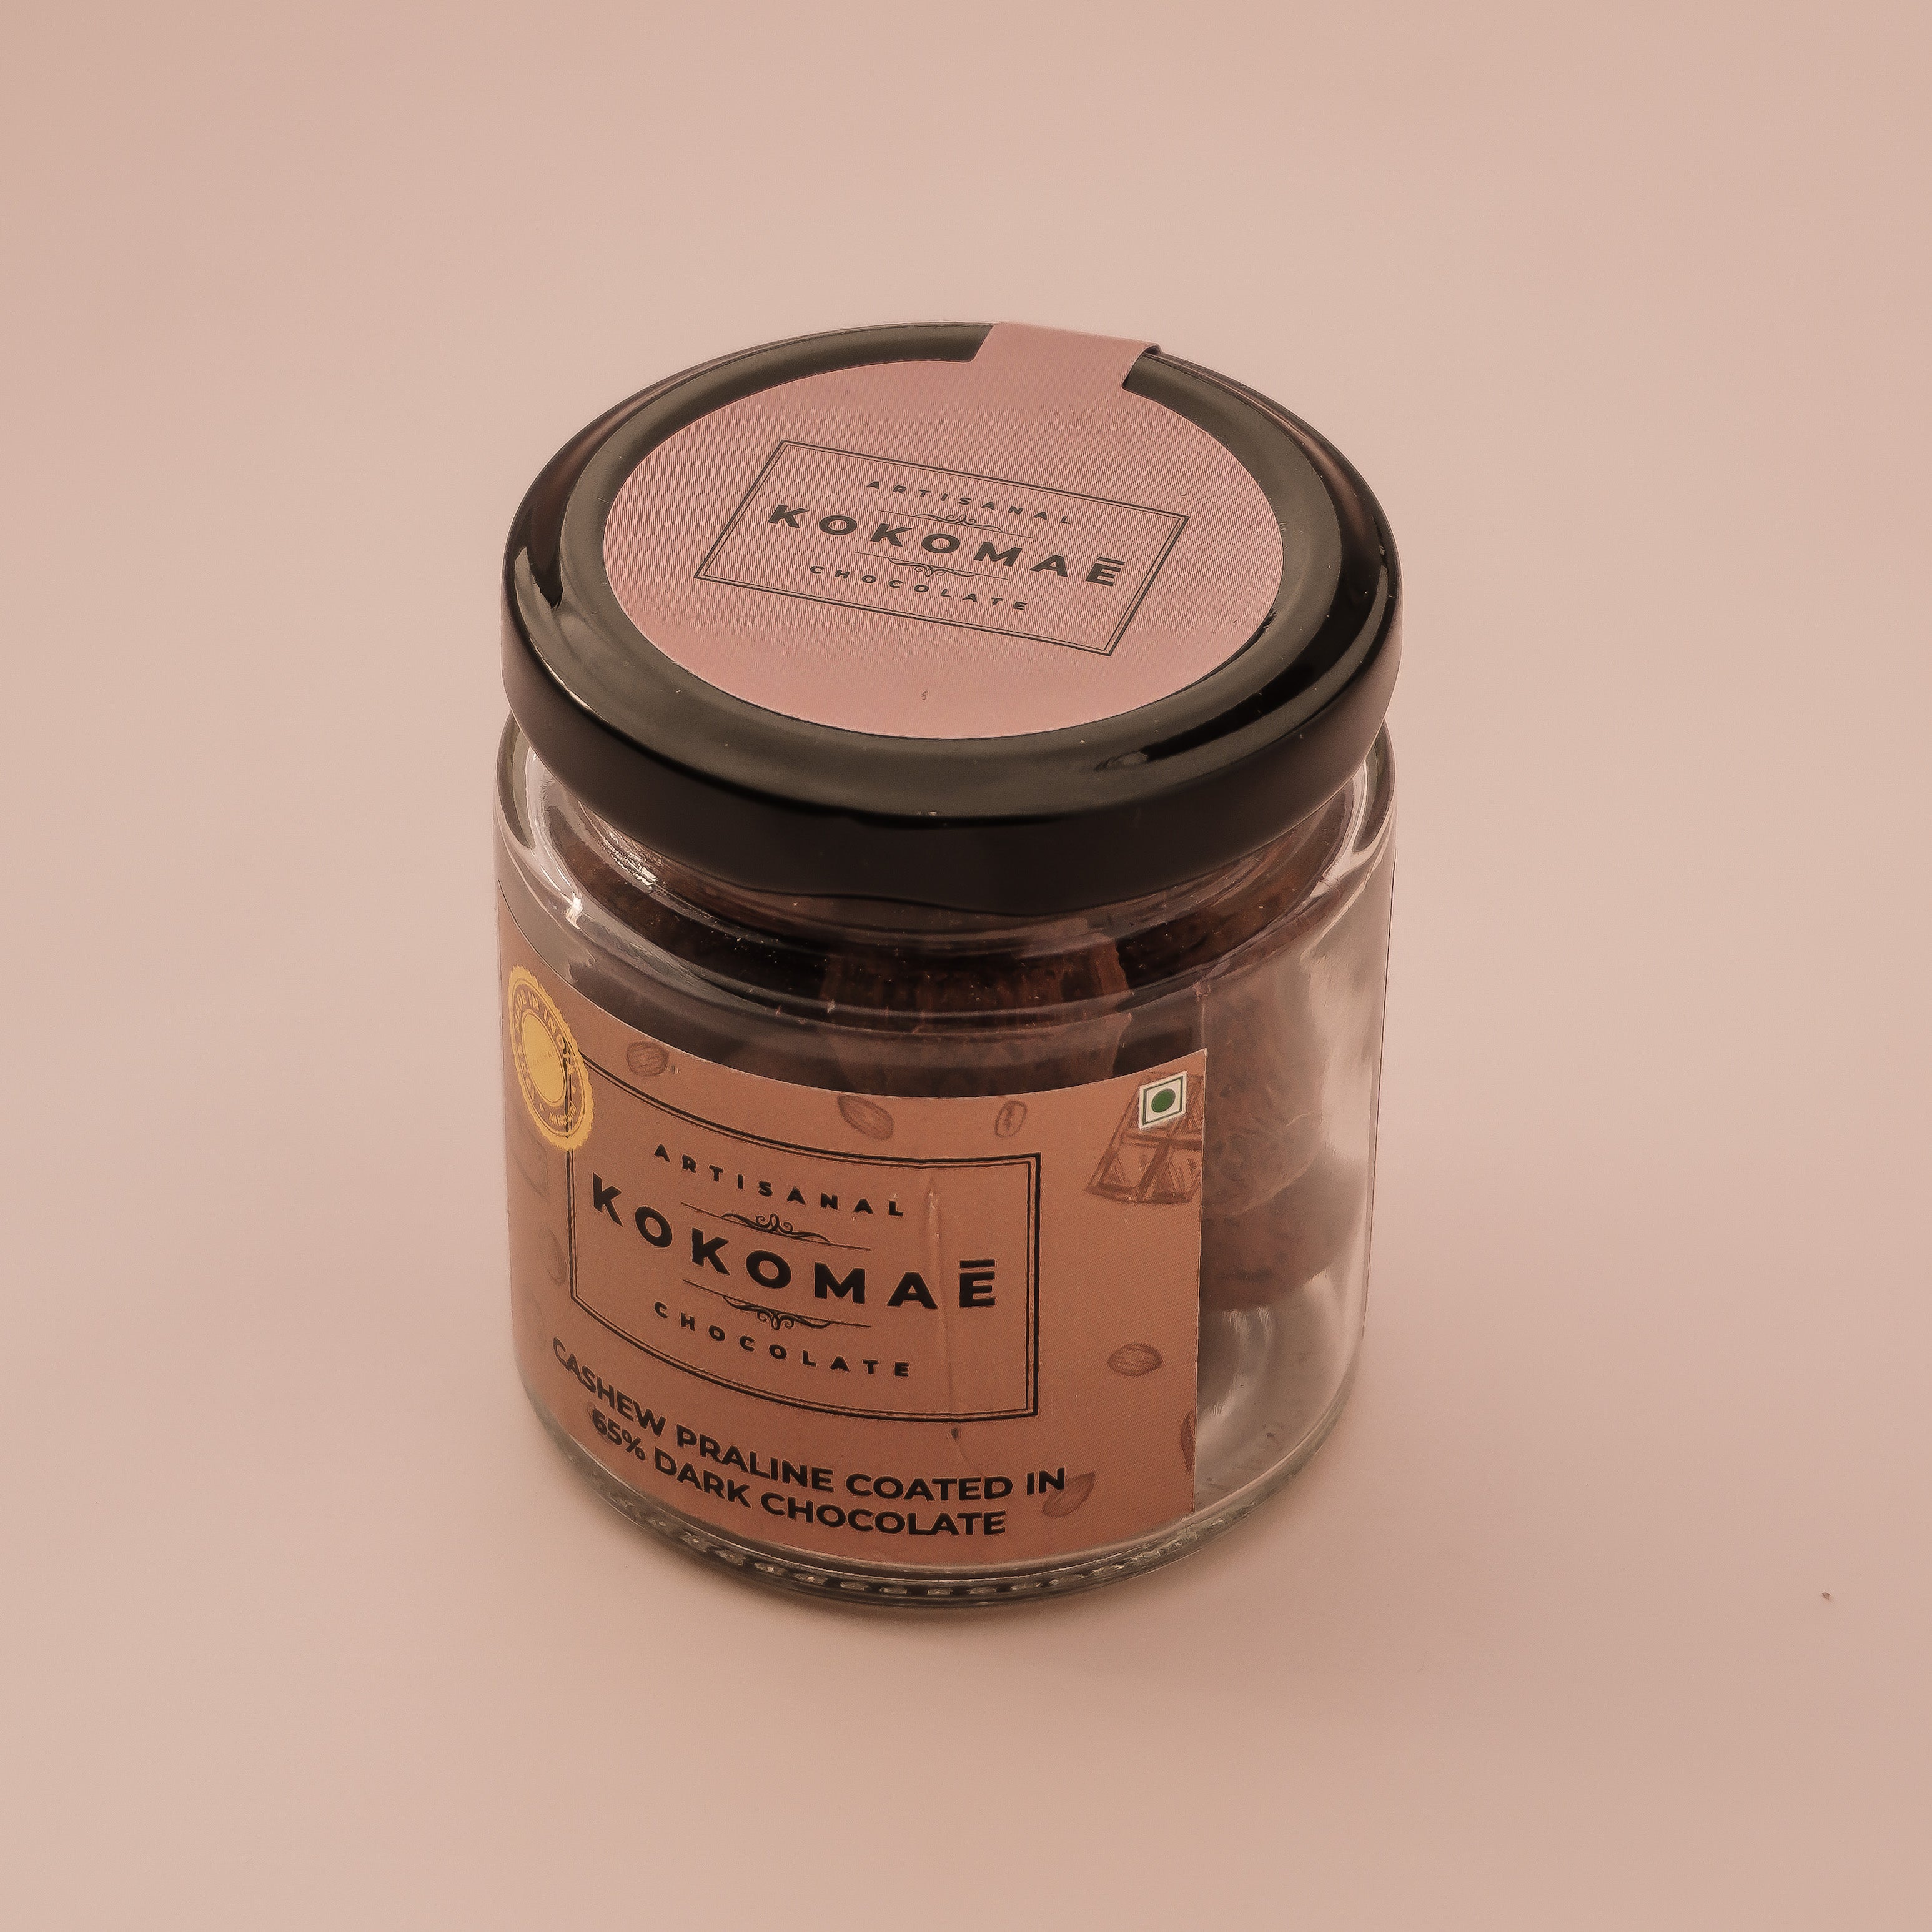 Kokomaē Cashew Praline Dragees lusiously coated in 65% Dark Chocolate